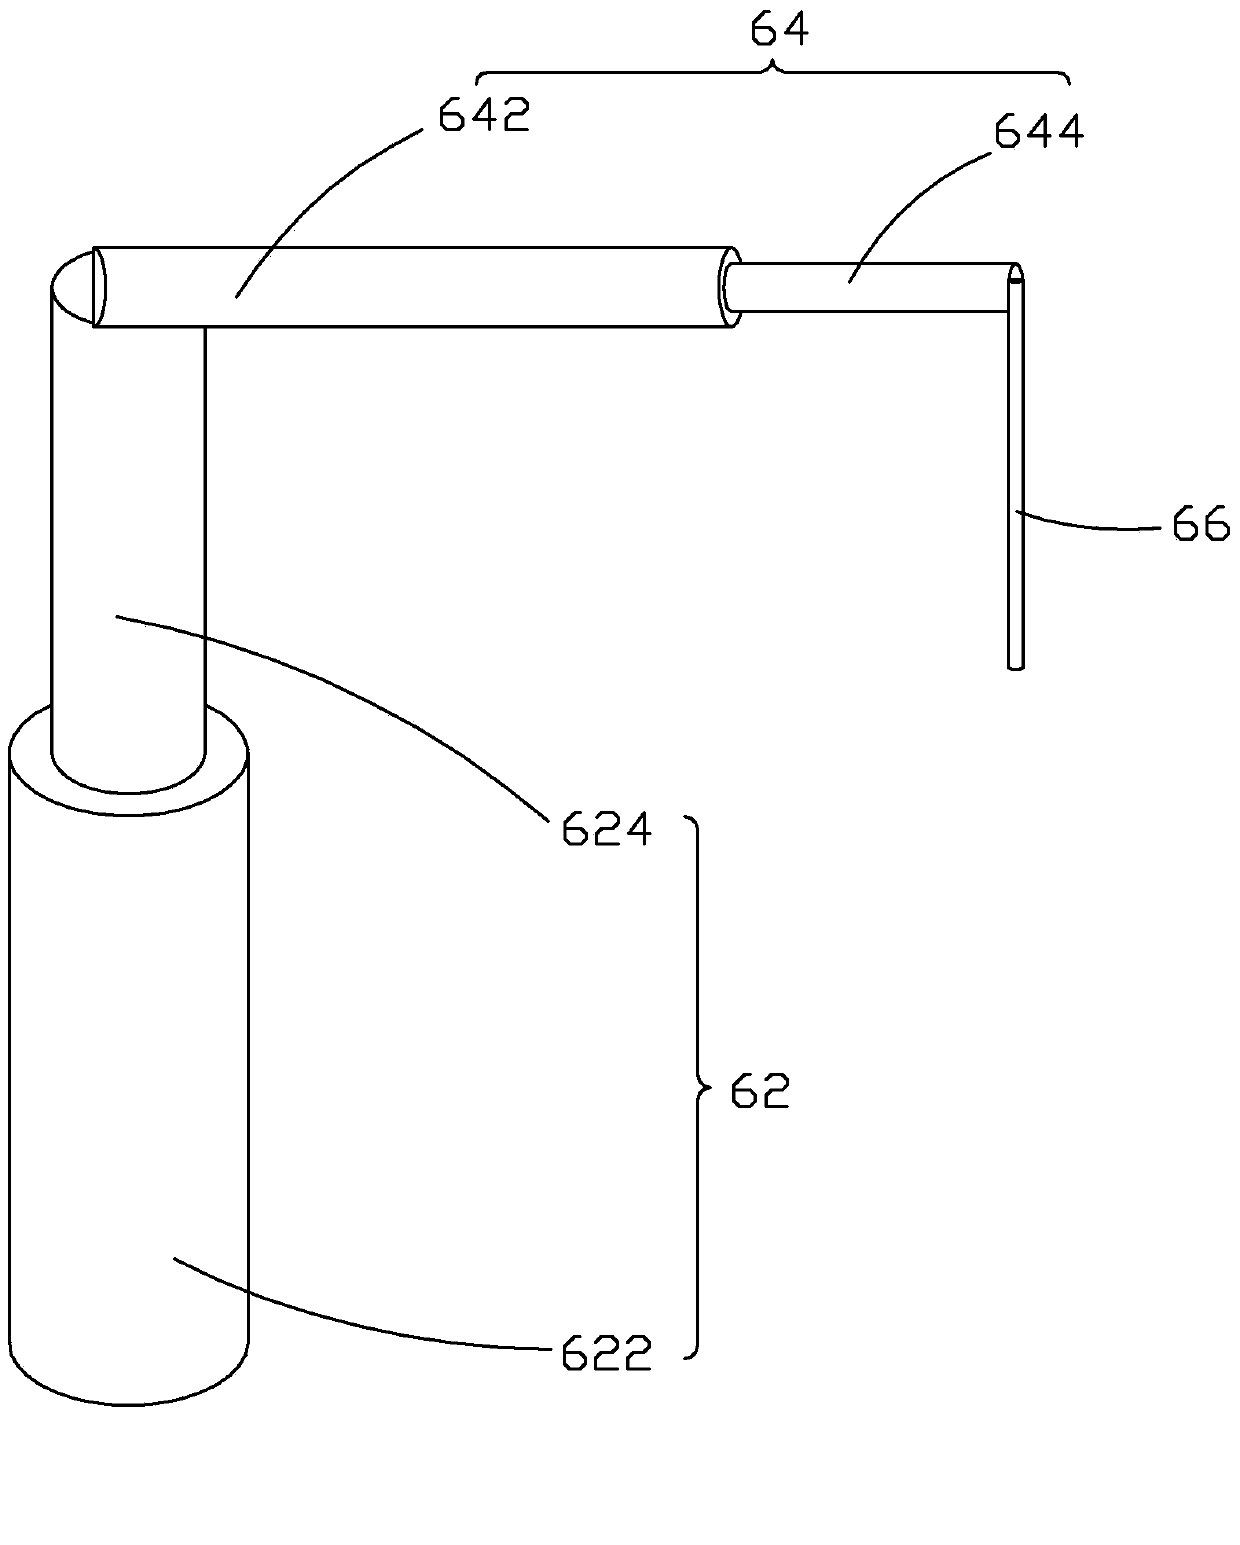 Evaporation source assembly of organic light-emitting diode (OLED) evaporator